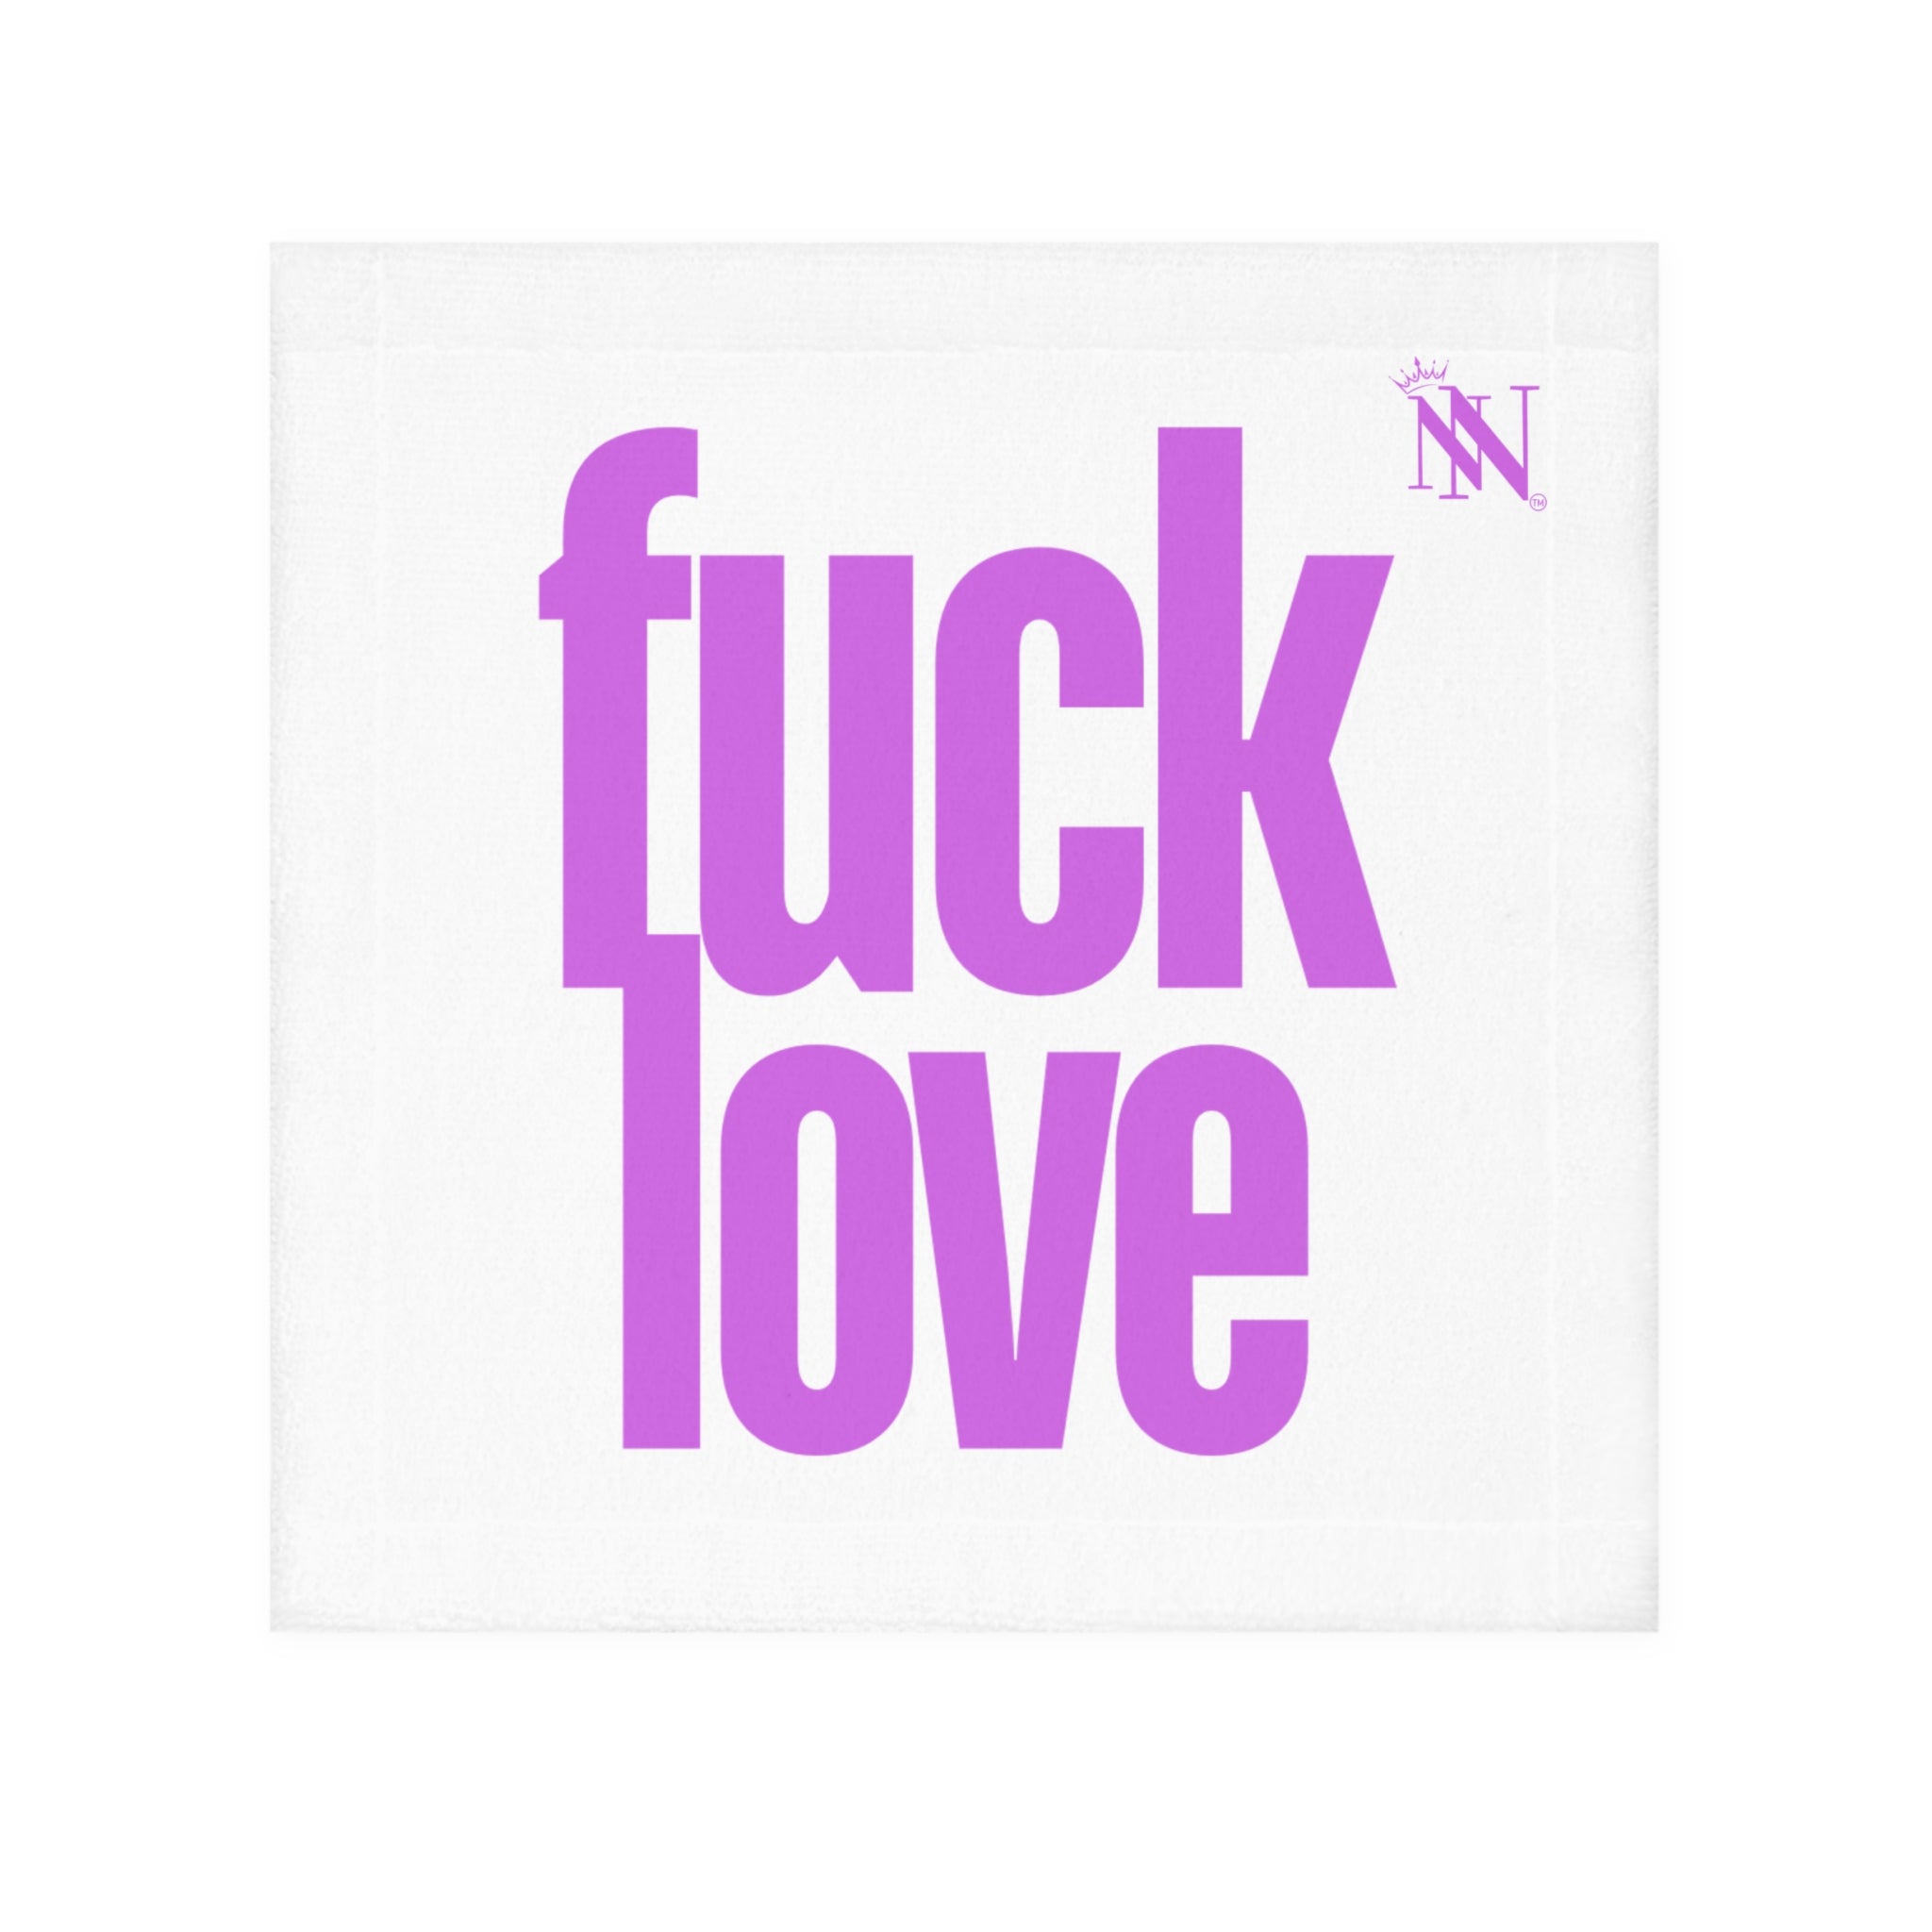 fuck love cum towel 